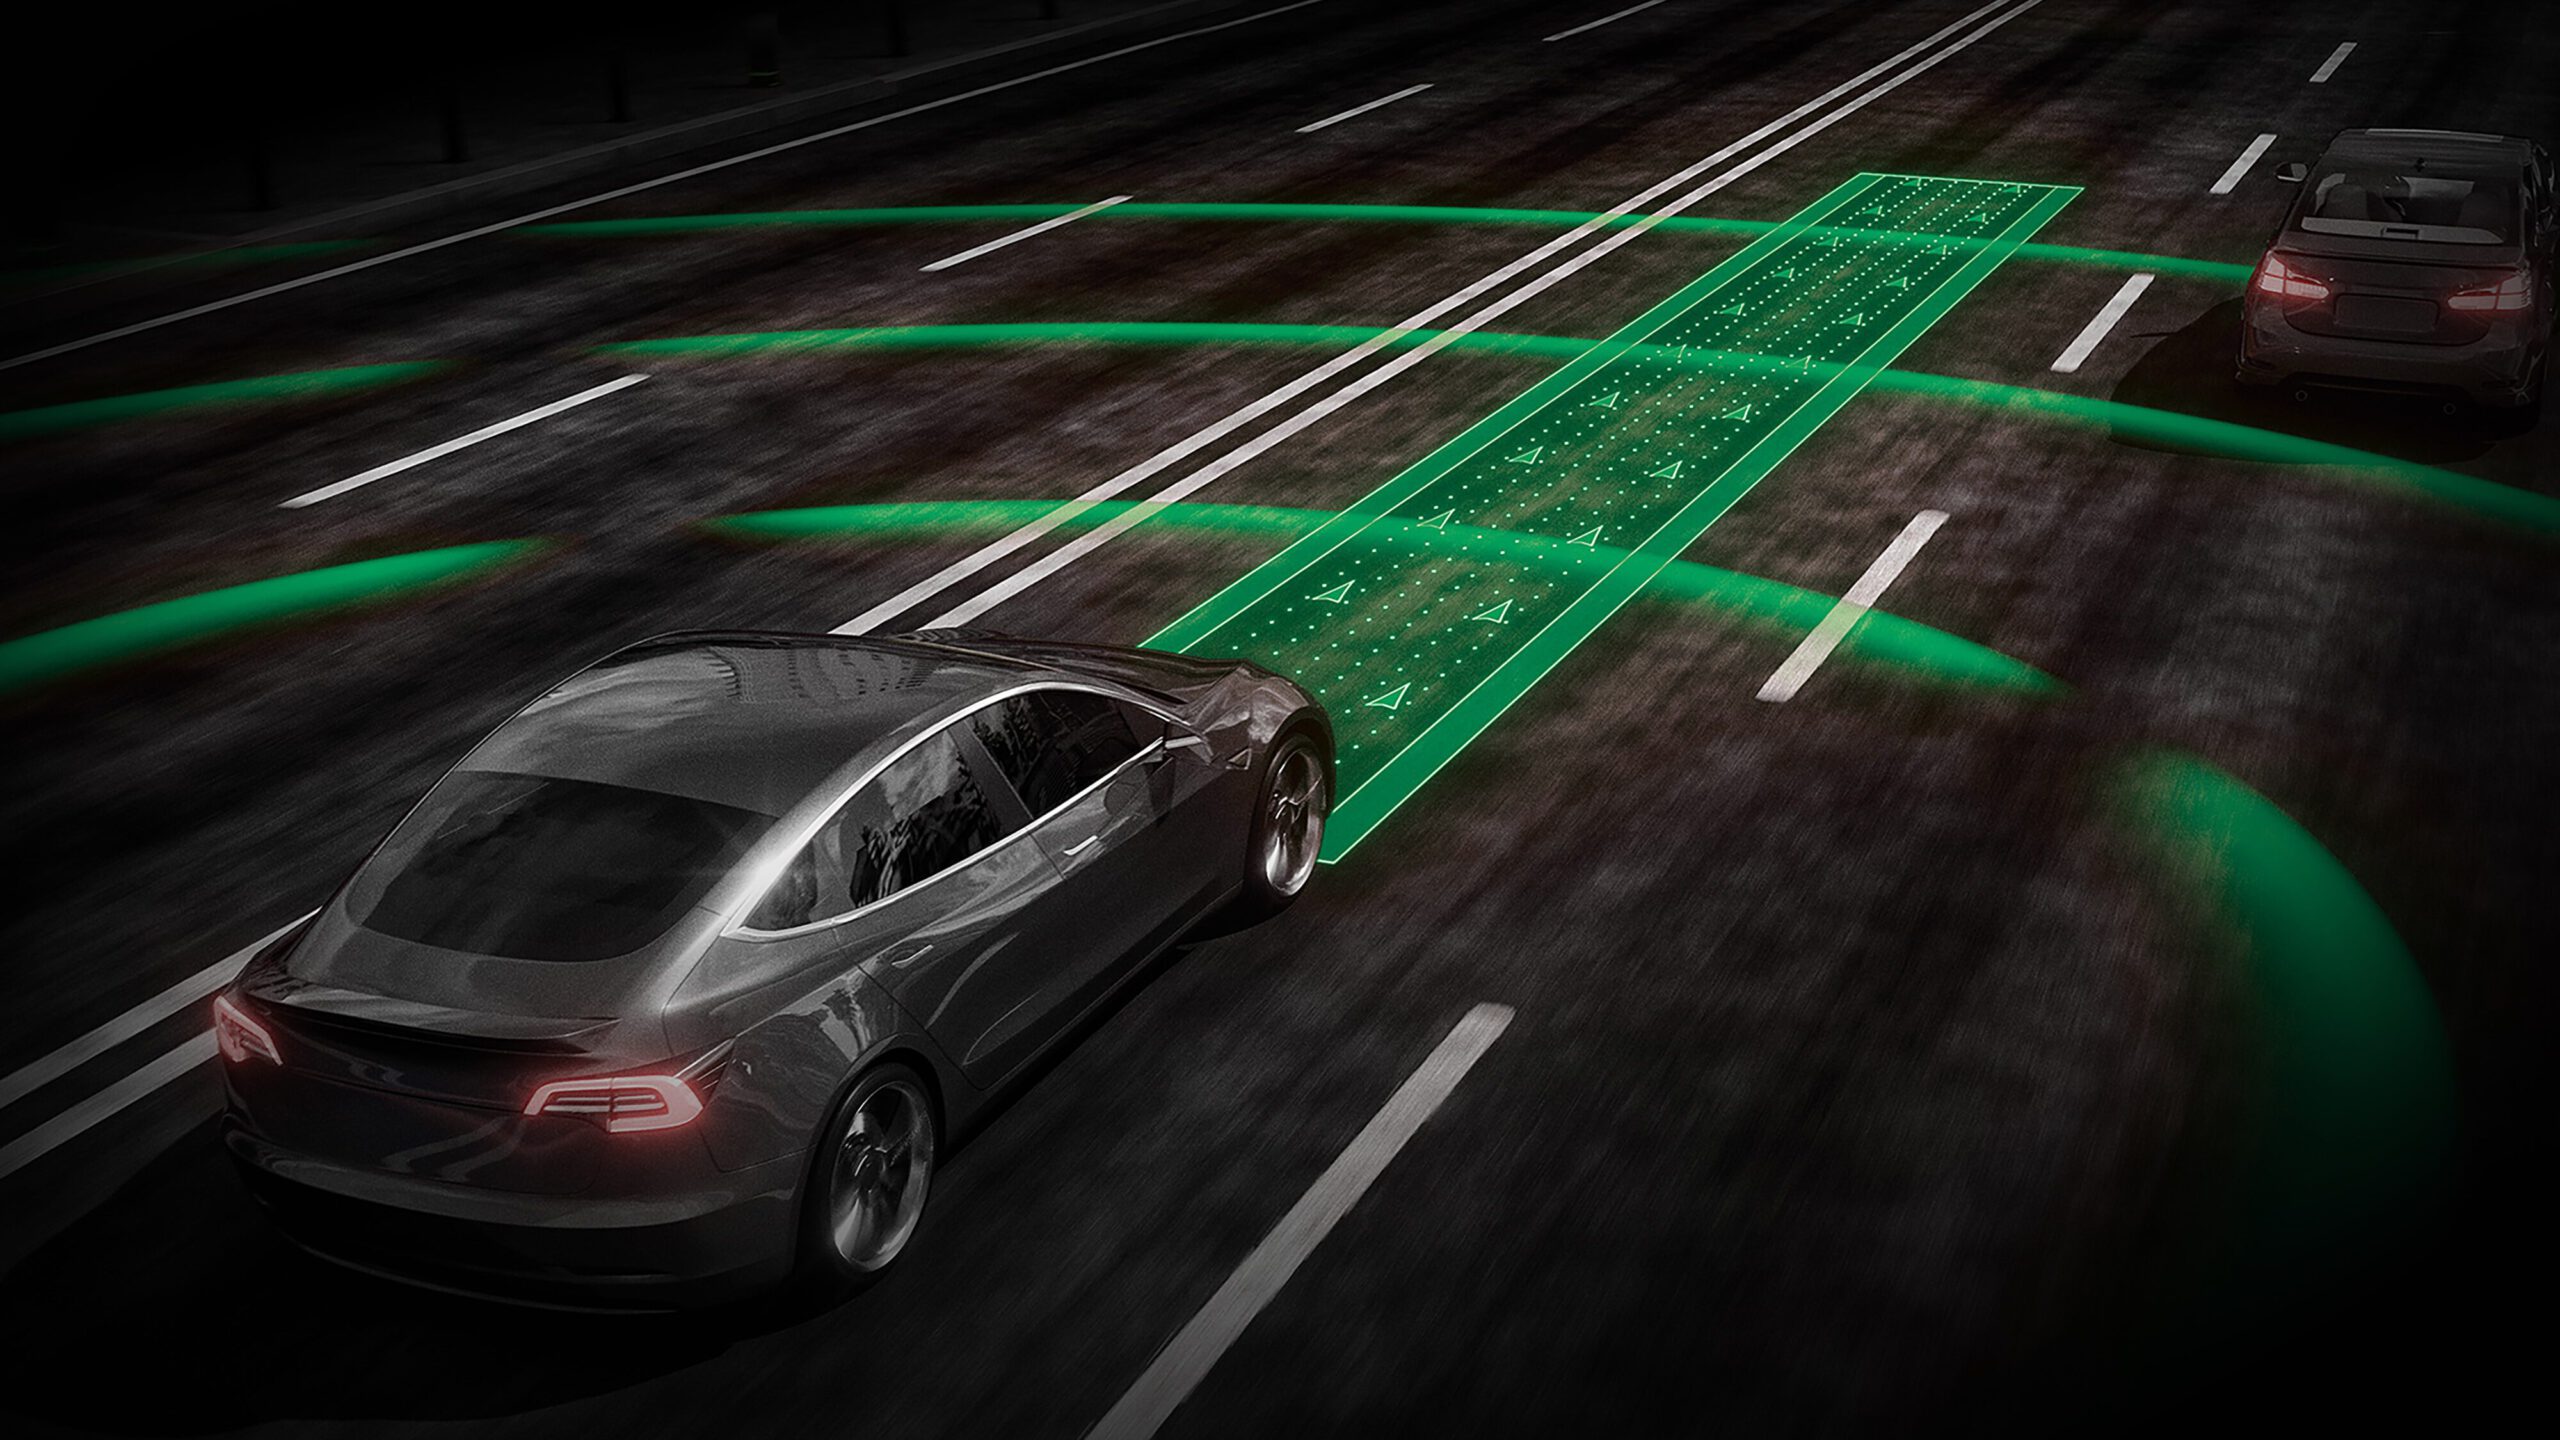 Tesla met rijhulpsystemen, Advanced Driver Assistance Systems (ADAS) geillustreerd op de snelweg.